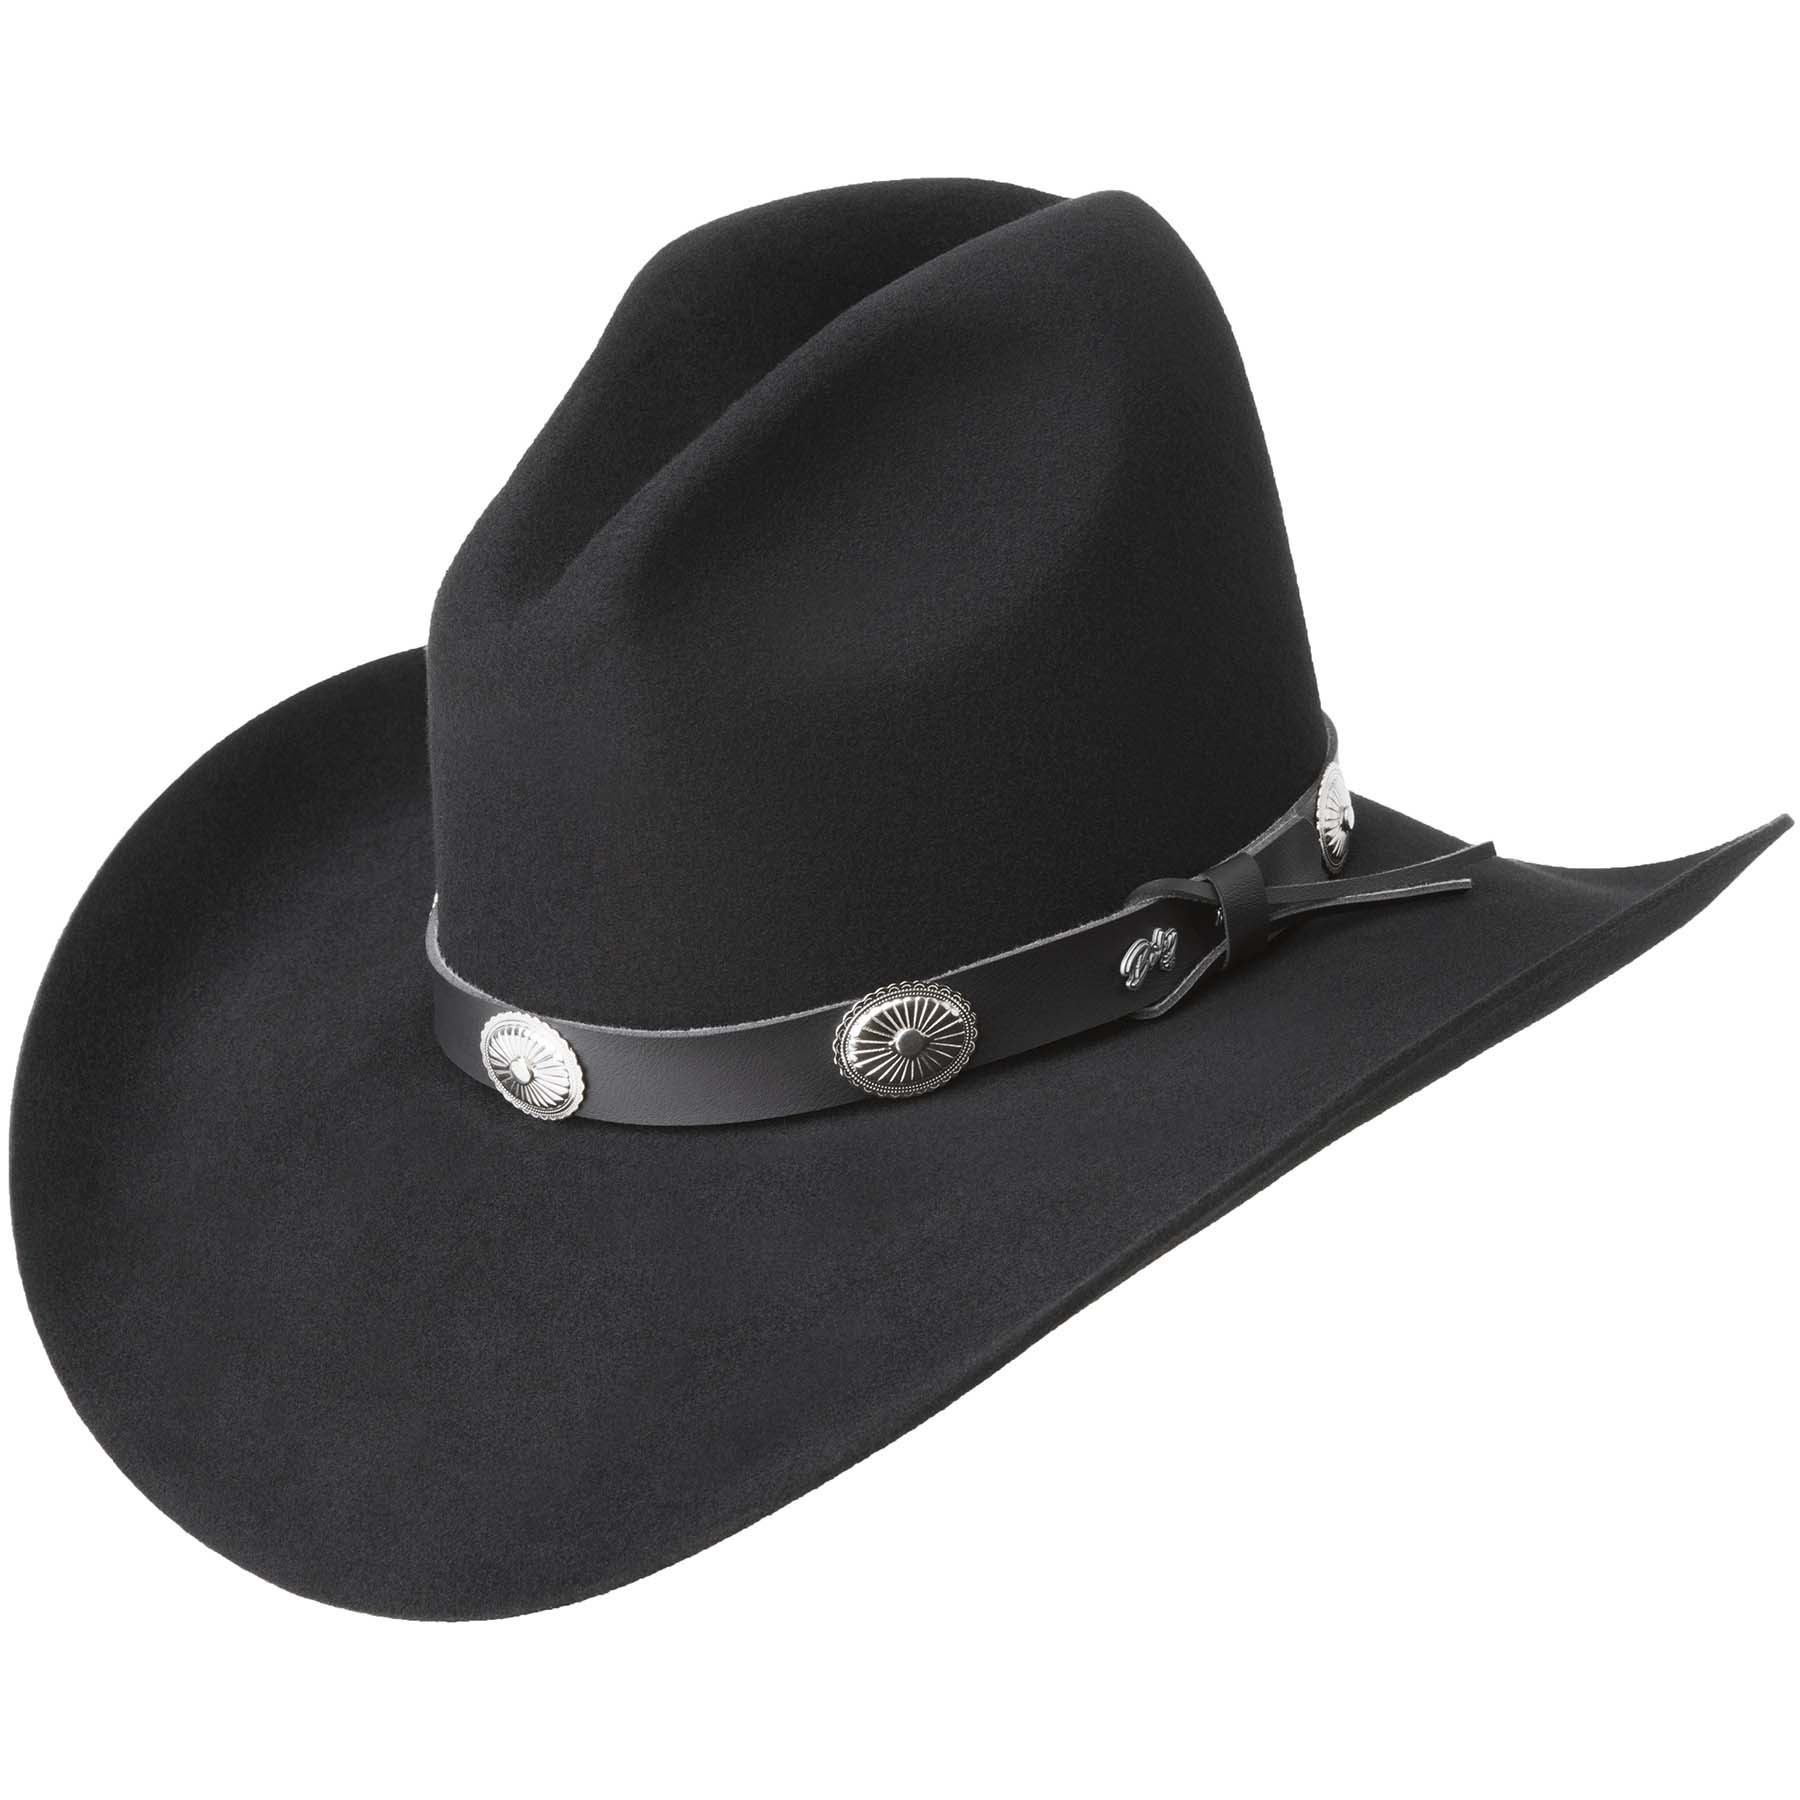 Pungo Ridge - Bailey Tombstone Western Felt Hat - Black, Bailey Felt Hats,  W0602G-BK001